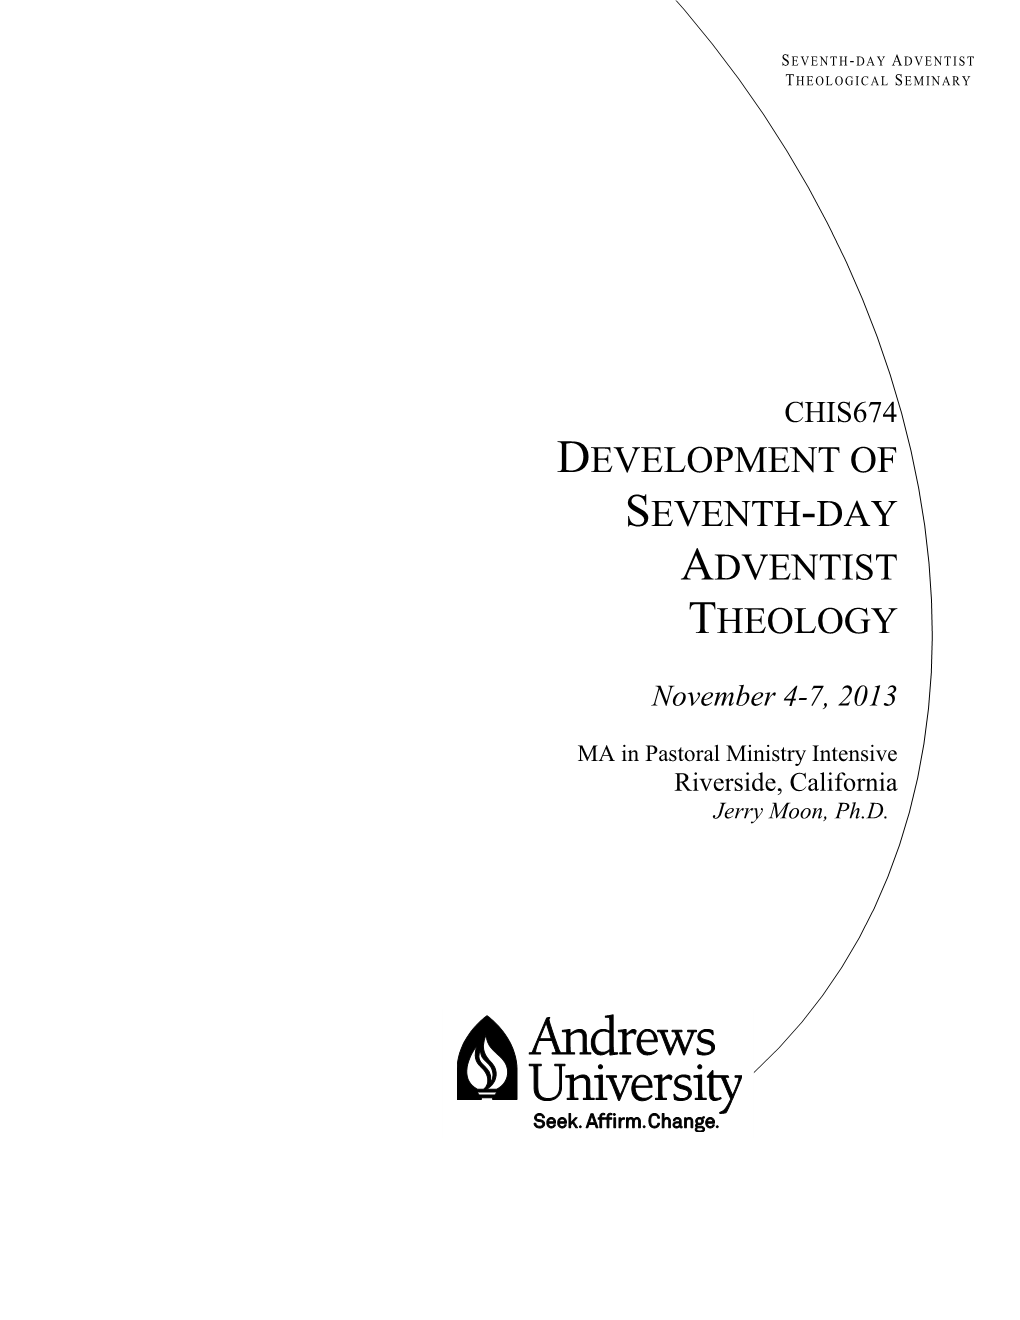 Development of Seventh-Day Adventist Theology